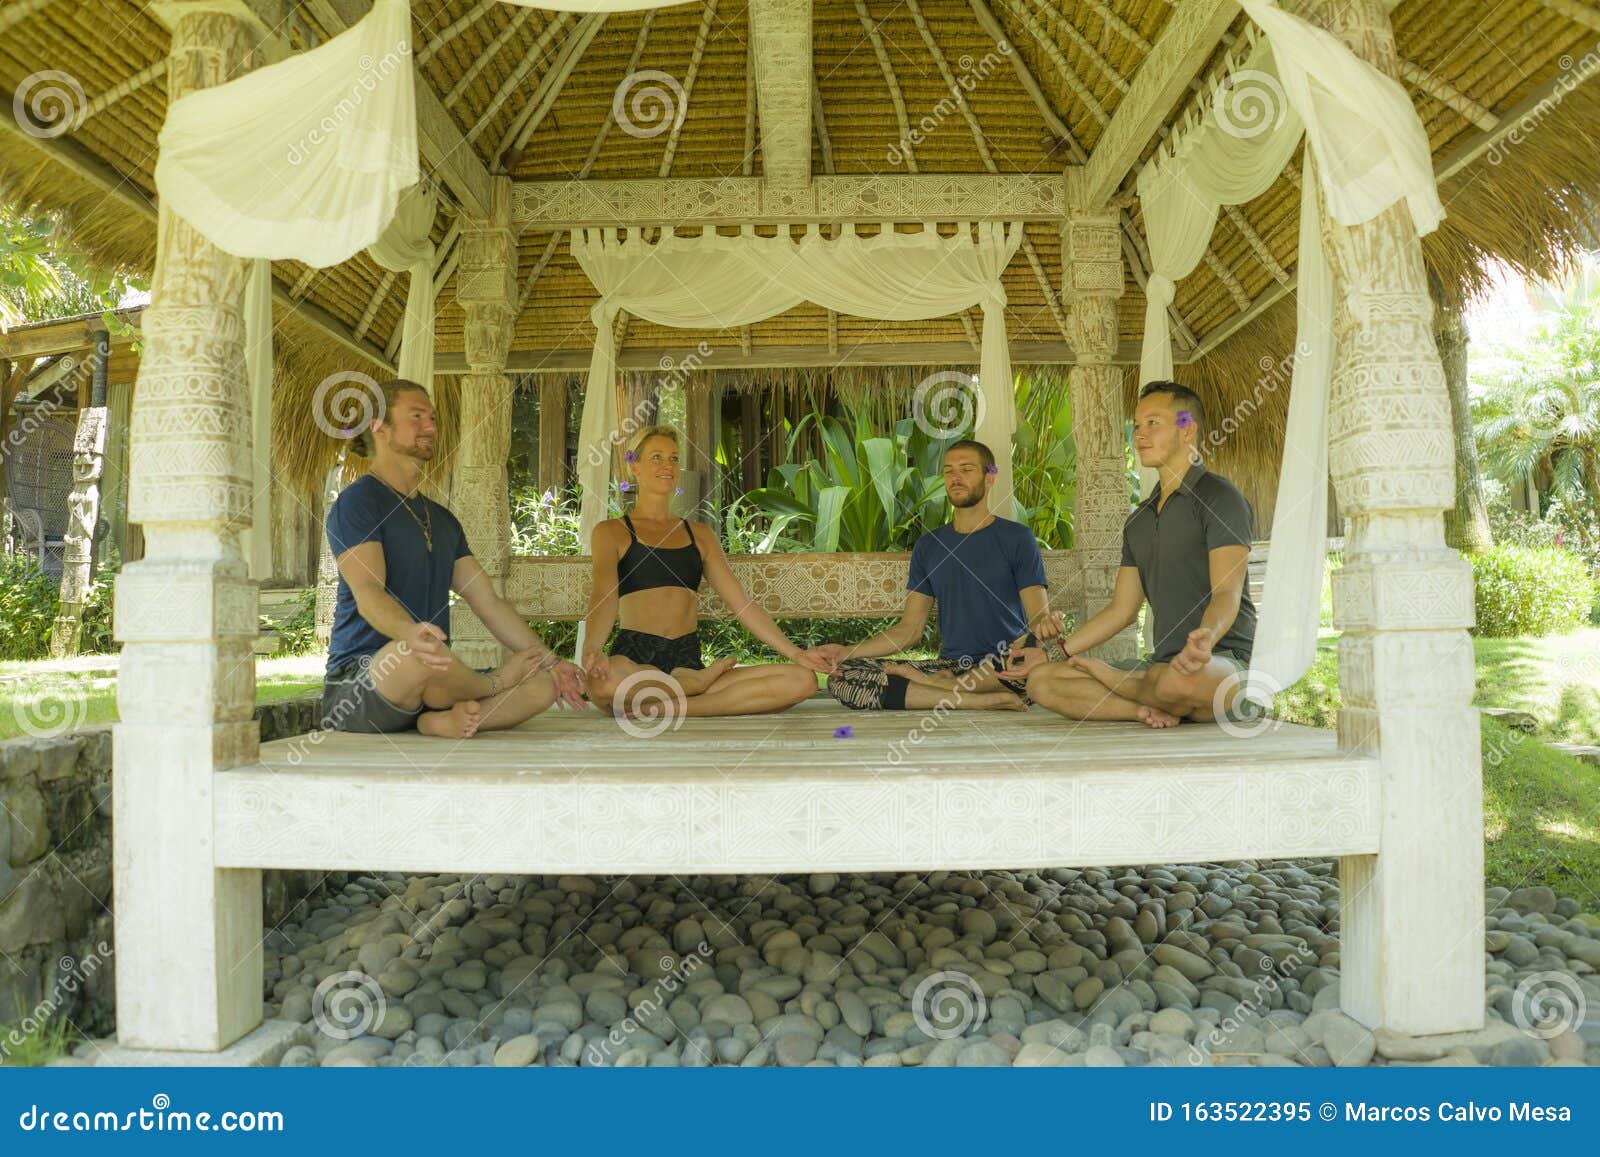 Group of three slim women sitting in lotus position on yoga mats